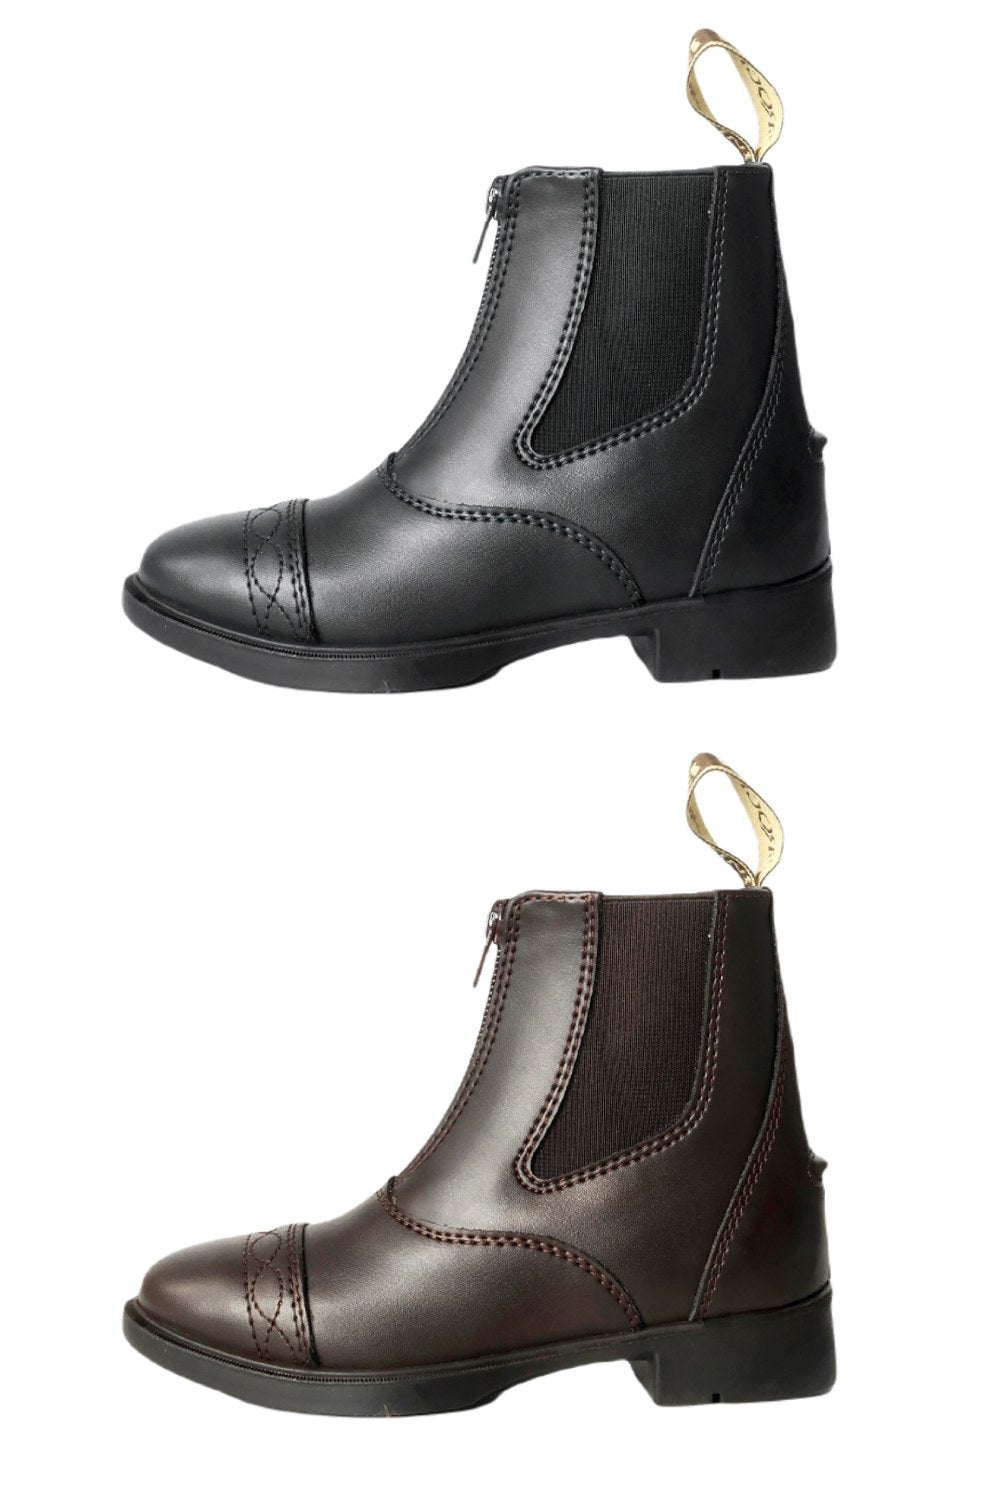 Brogini Tivoli Piccino Yr Paddock Boots Childs In Black and Brown